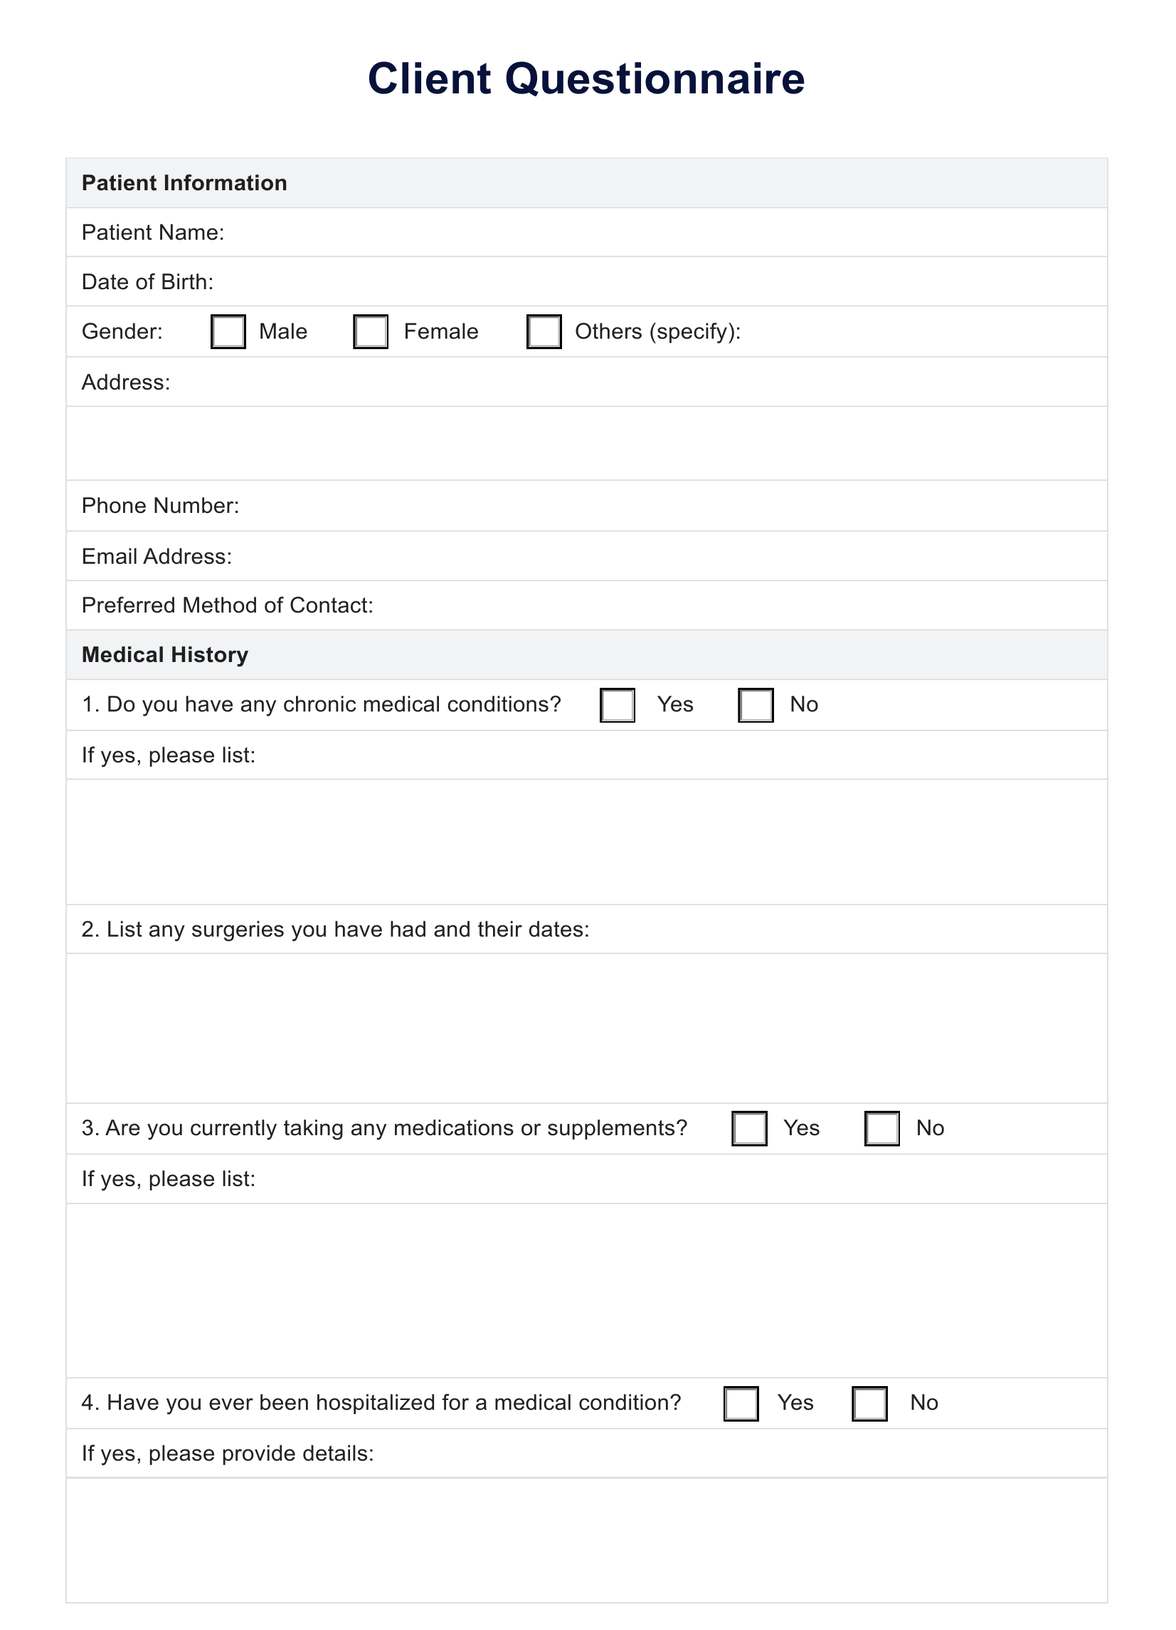 Client Questionnaire Template PDF Example